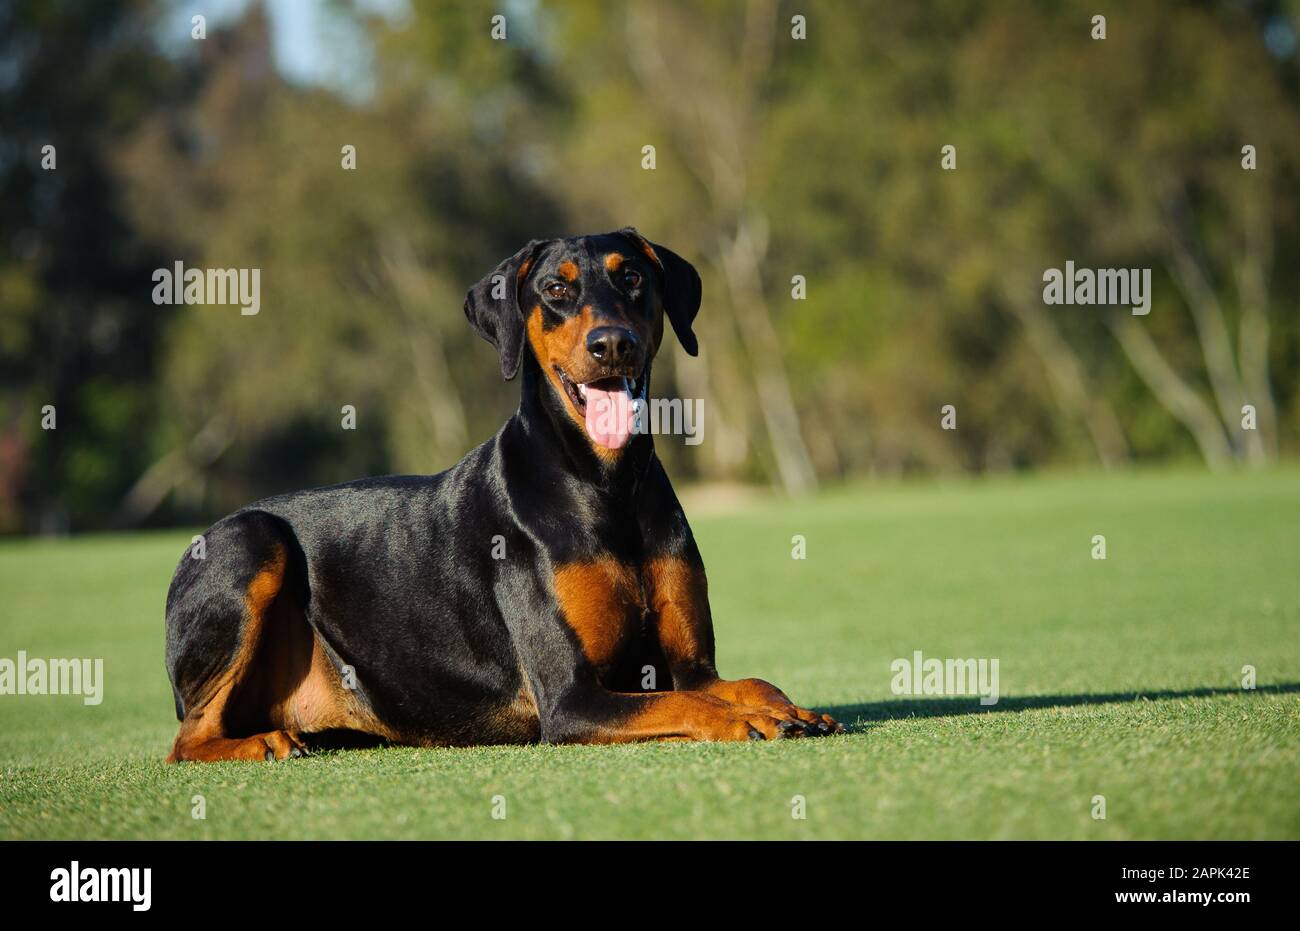 Doberman pinscher dog hi-res stock photography and images - Alamy